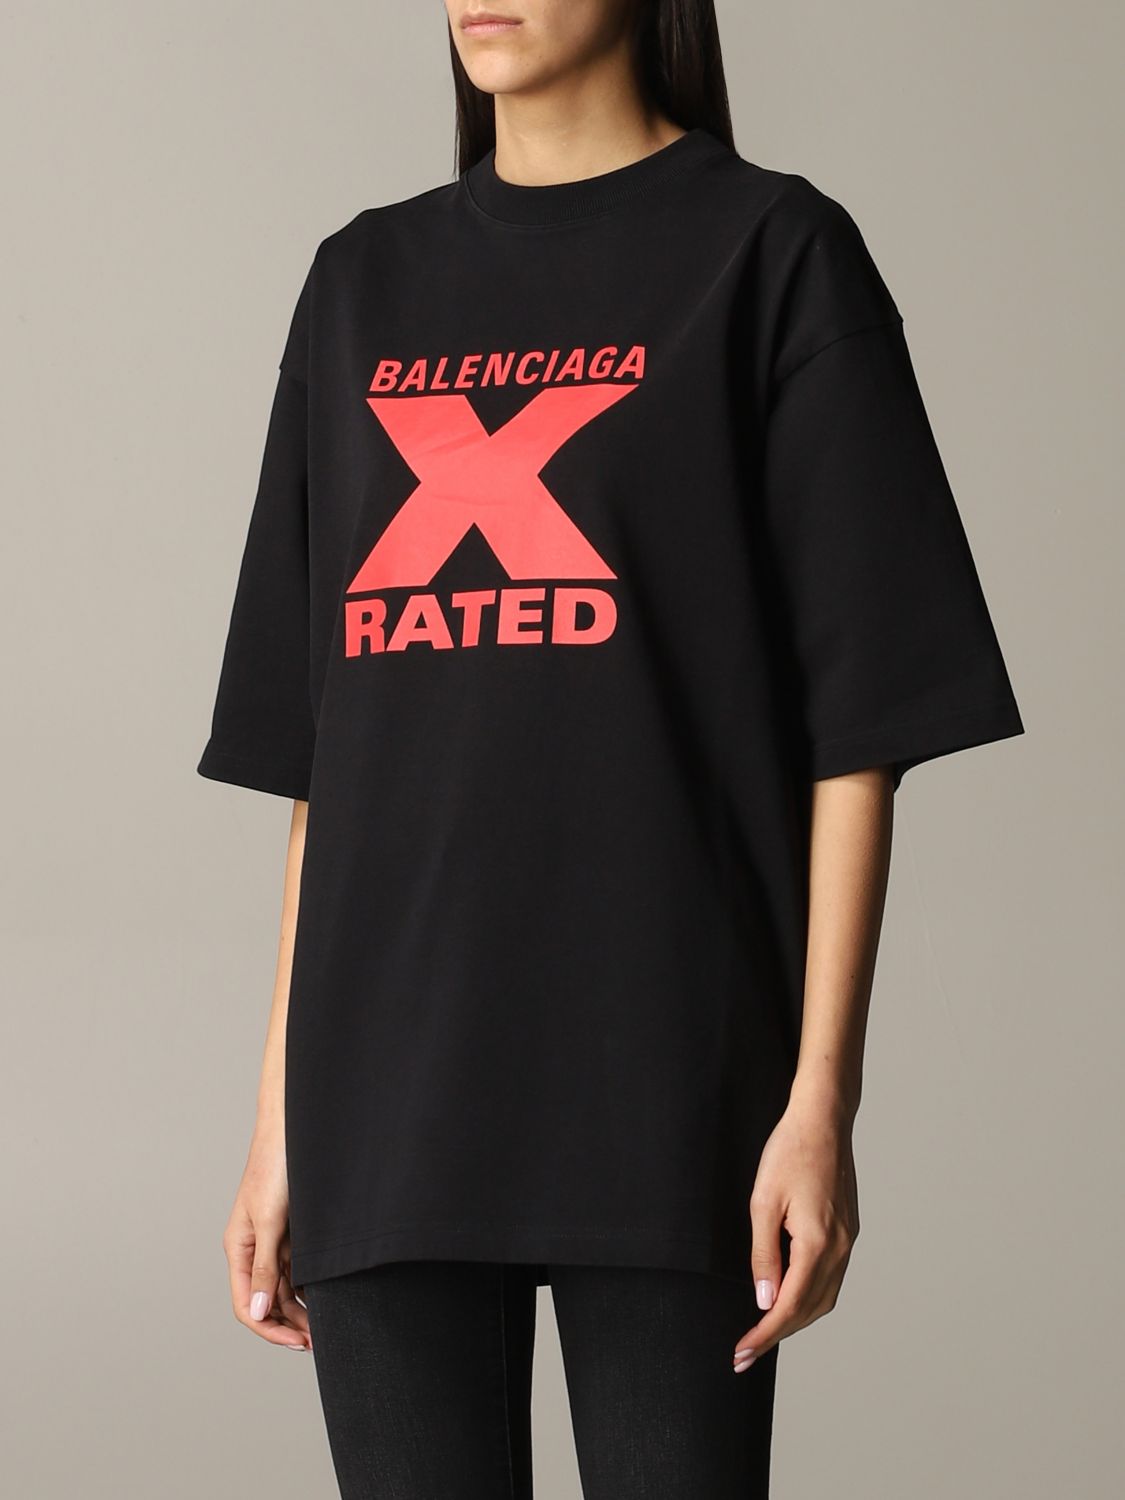 Balenciaga Outlet: T-shirt women | T-Shirt Balenciaga Women Black | T